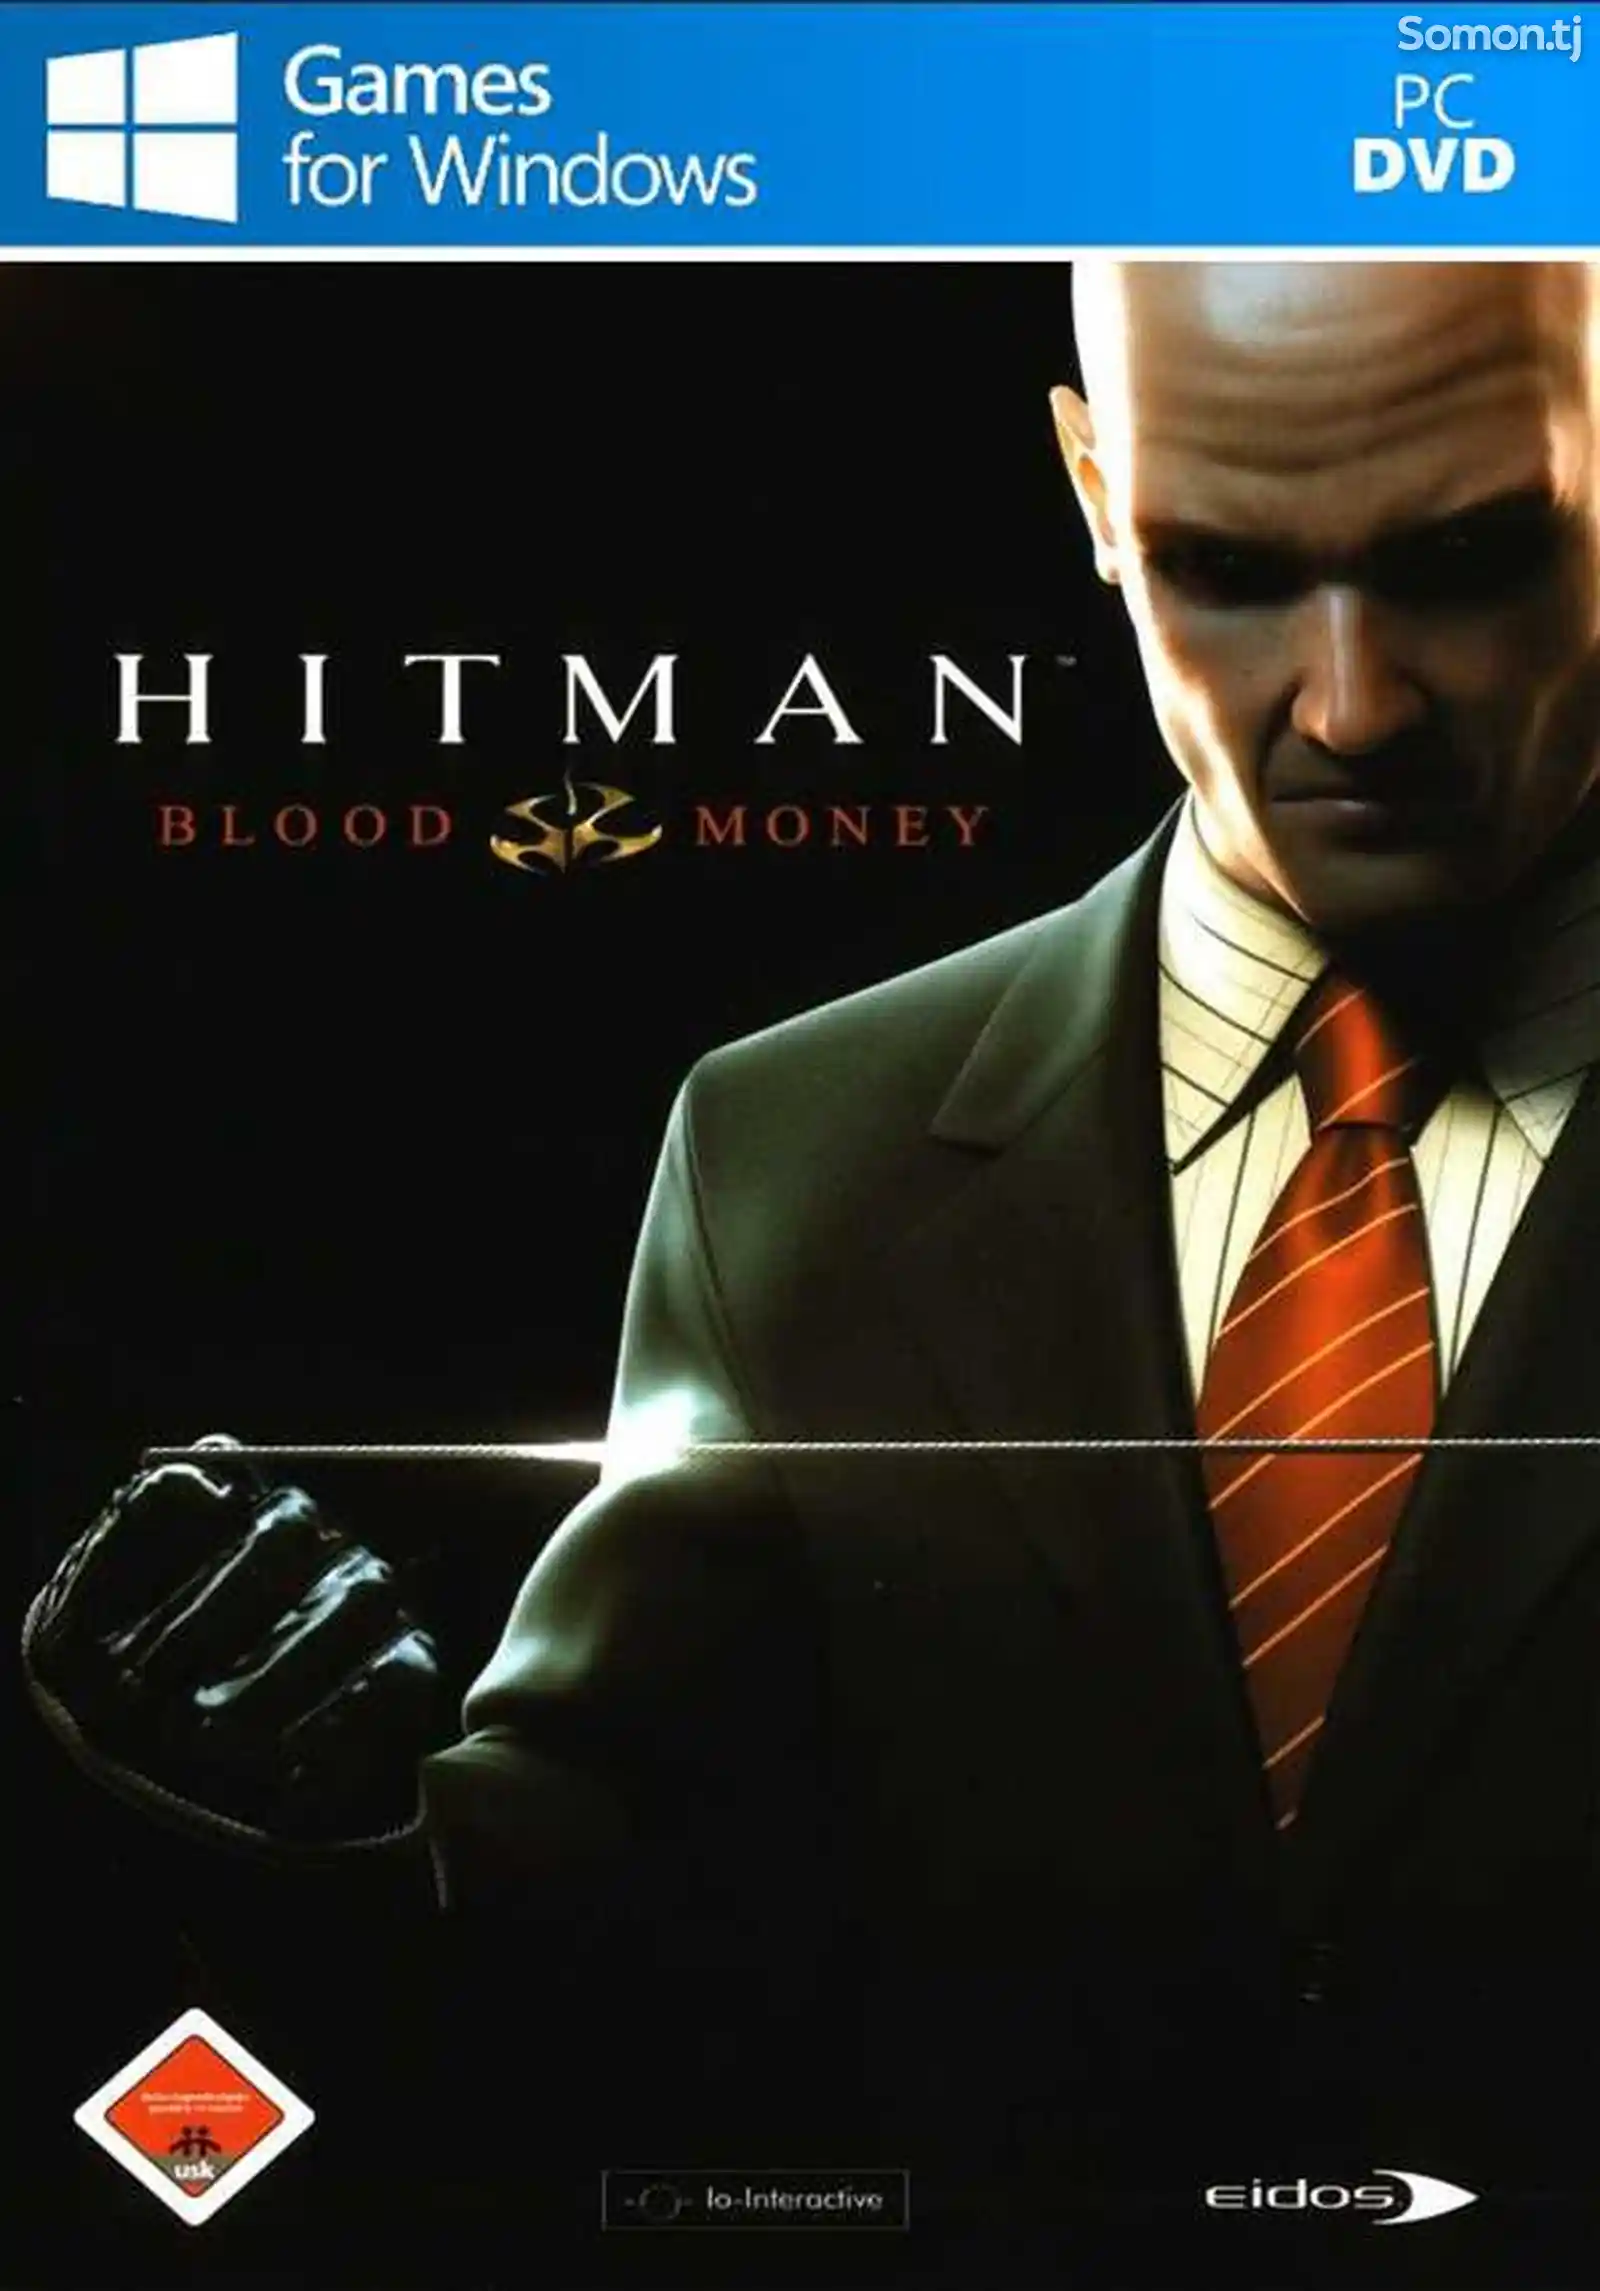 Игра Hitman Blood money для компьютера-пк-pc-1